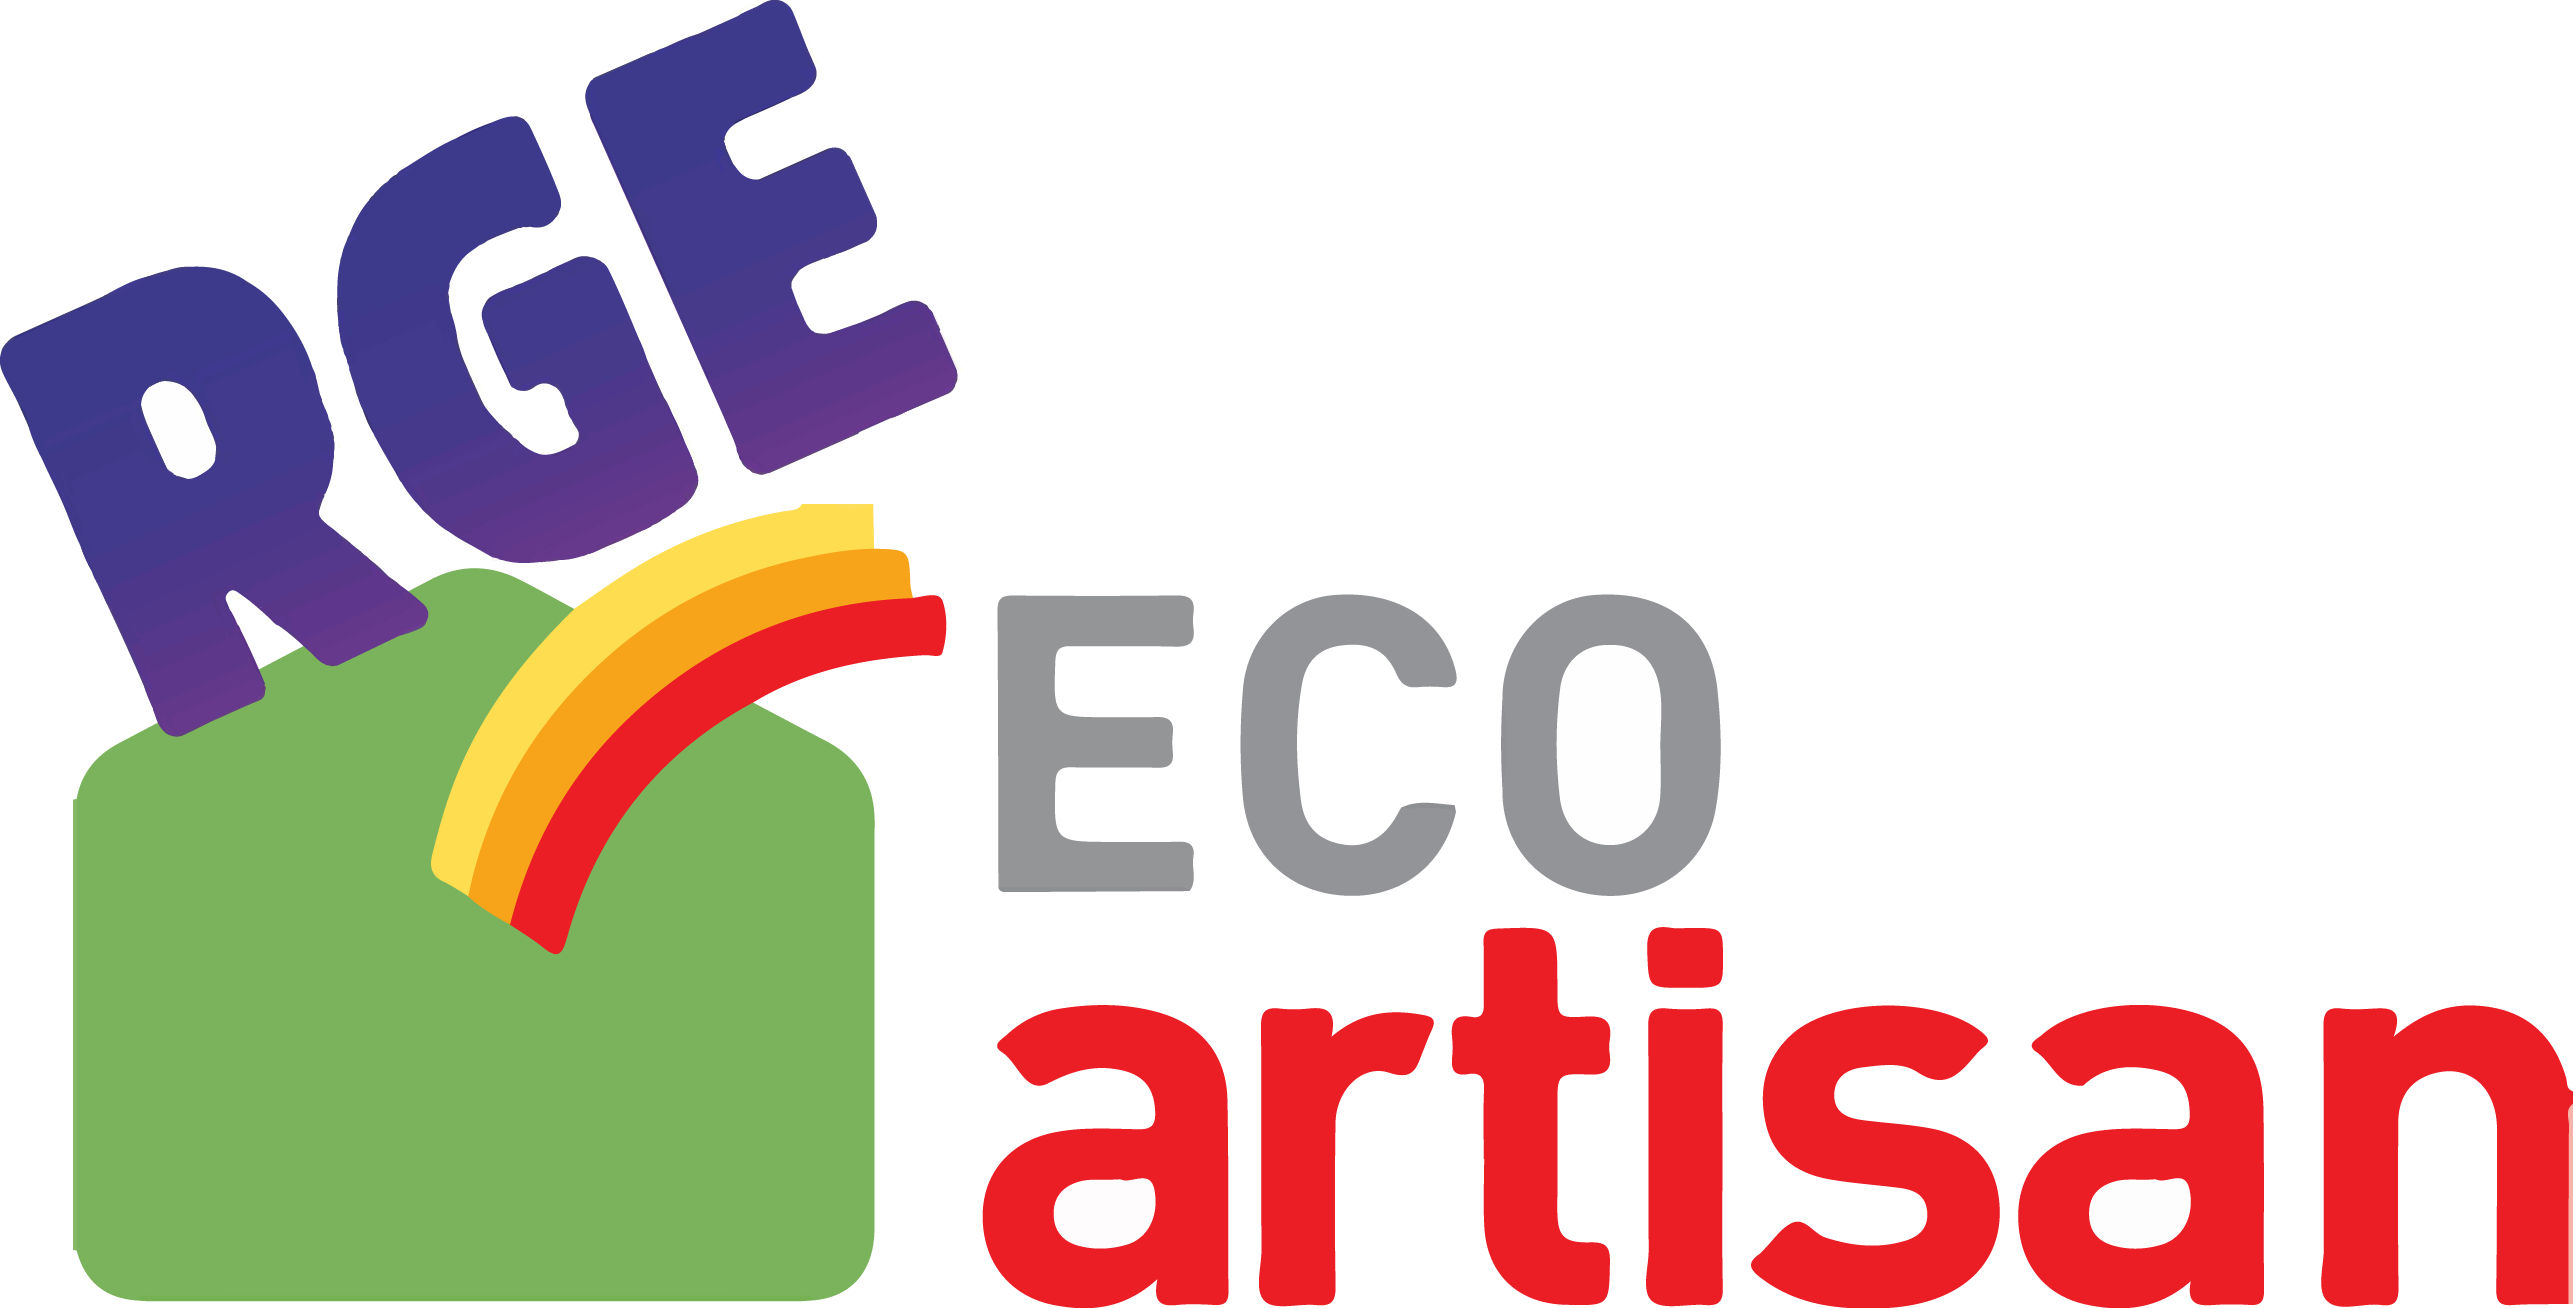 Logo eco artisan png